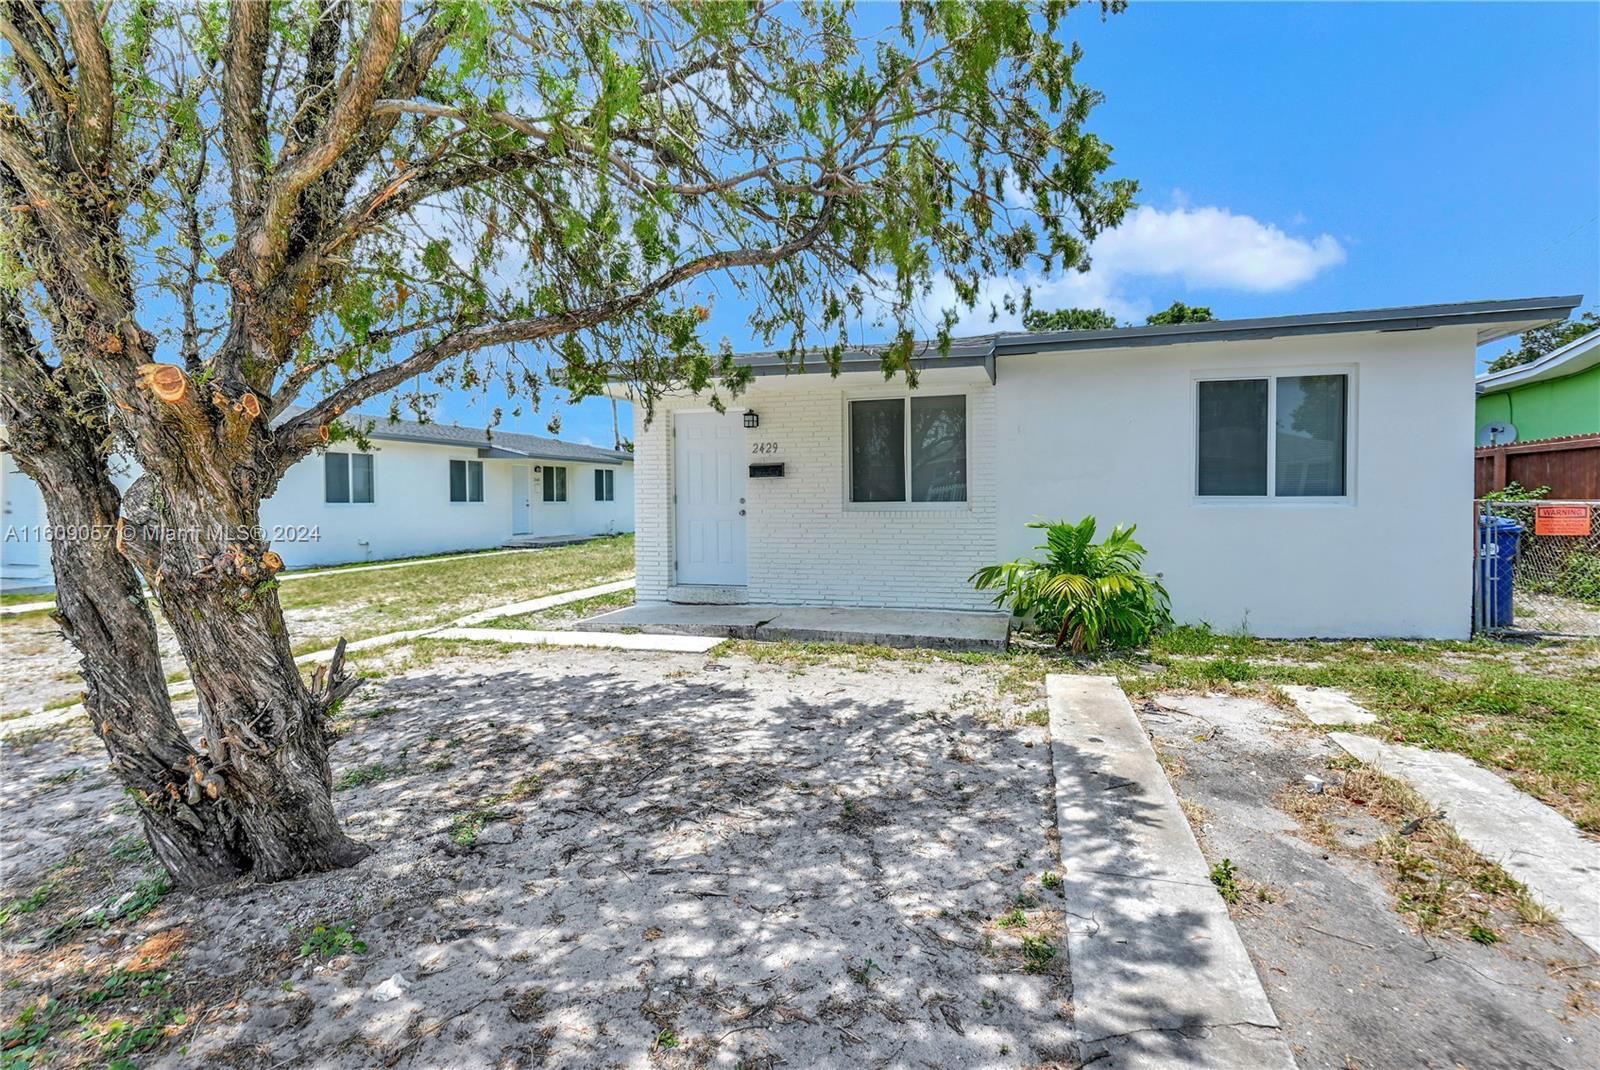 Real estate property located at 2429-31 81st Ter, Miami-Dade County, AVOCADO PARK, Miami, FL